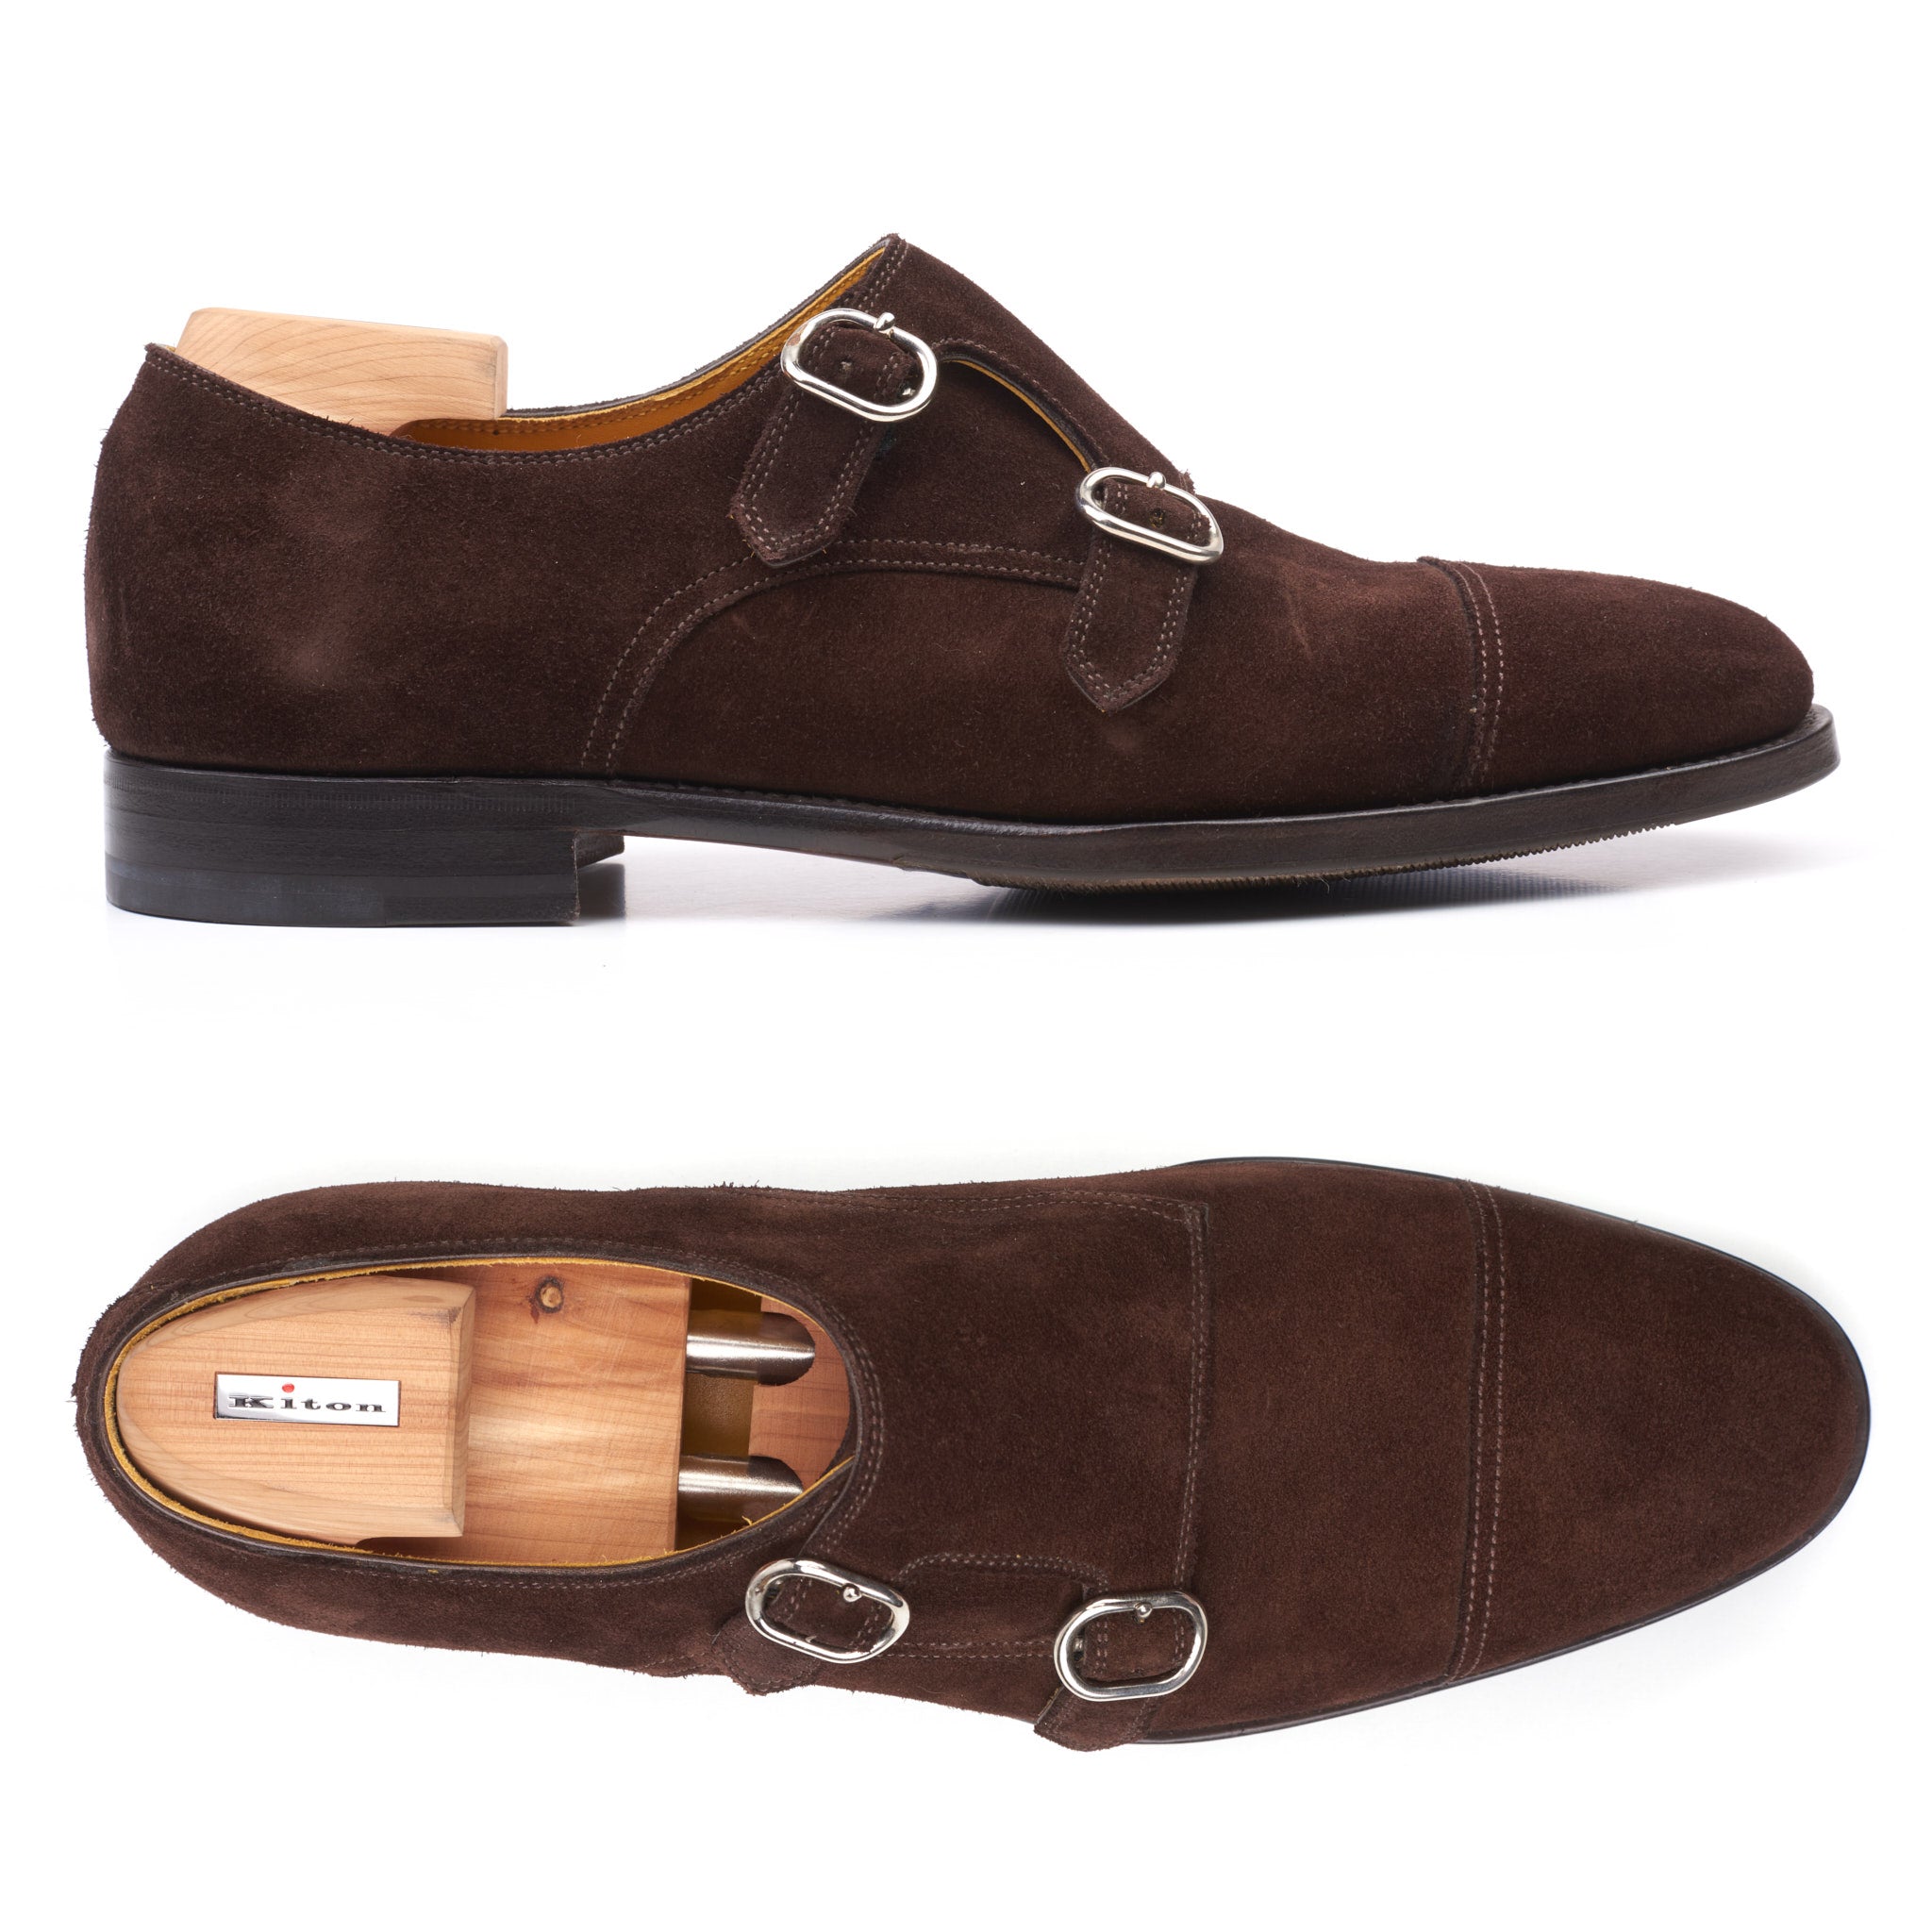 KITON Napoli Handmade Brown Calfskin Suede Leather Double Monk Shoes US 9.5 NEW KITON